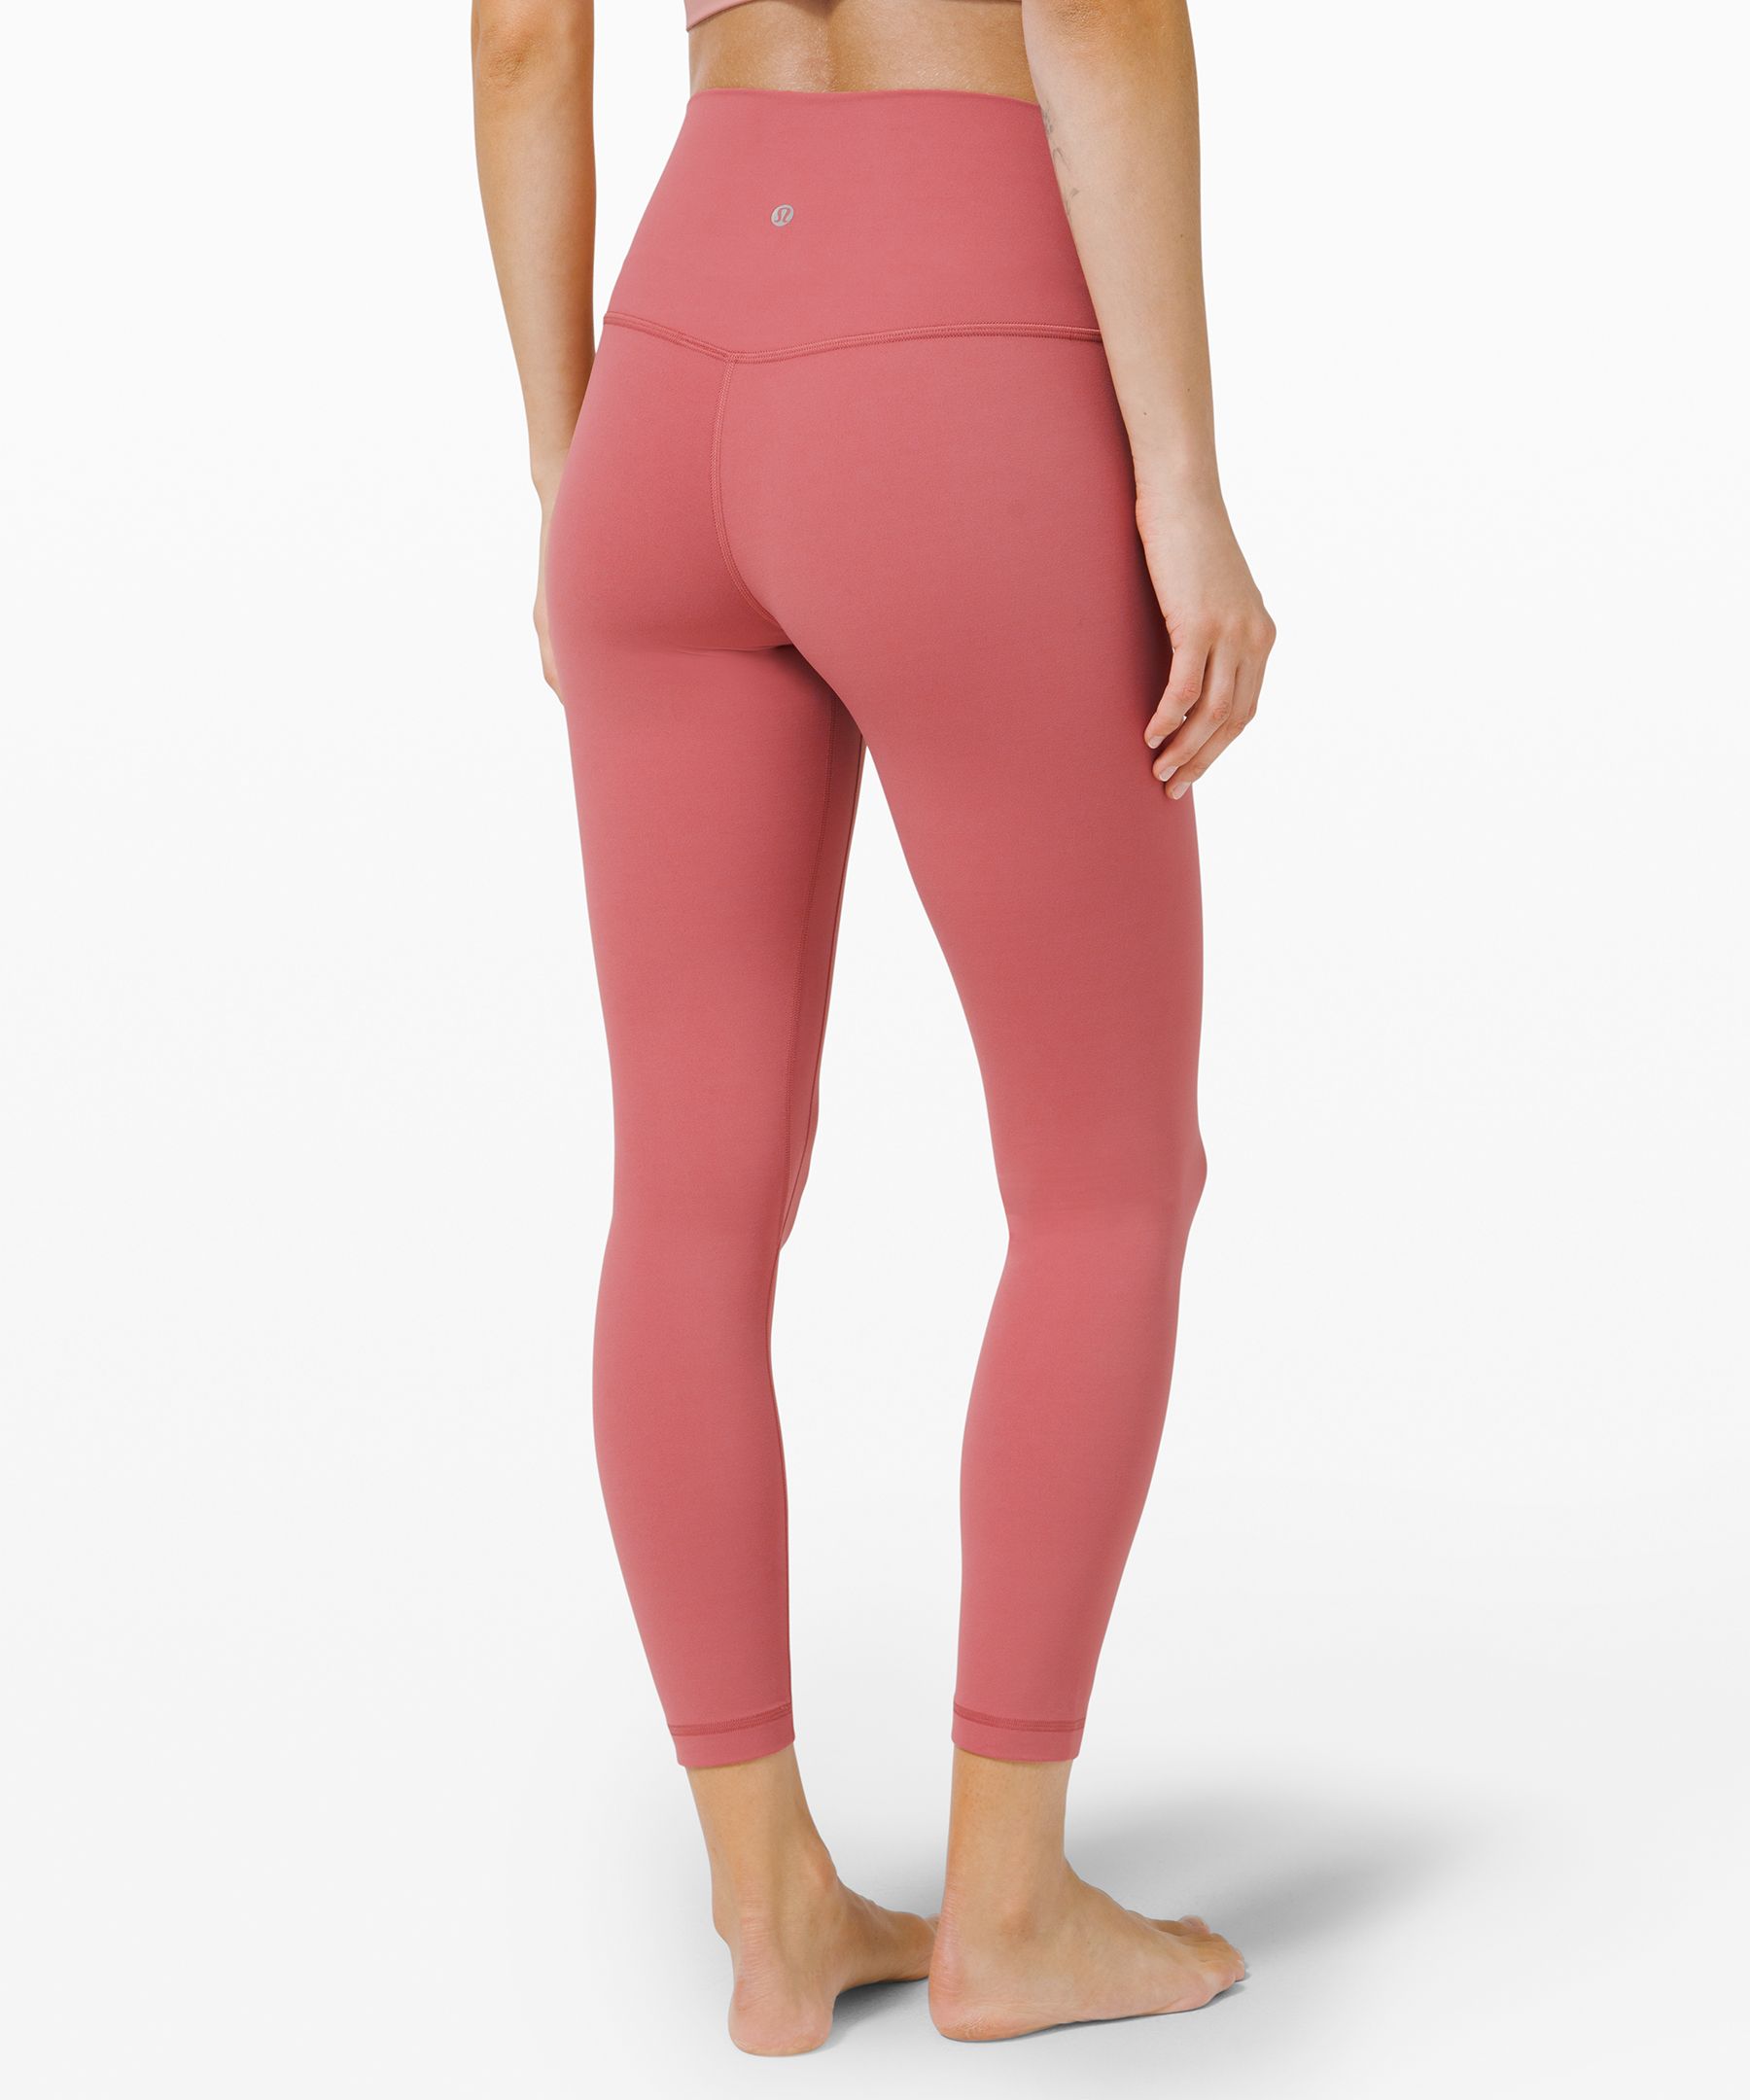 lululemon pink tights